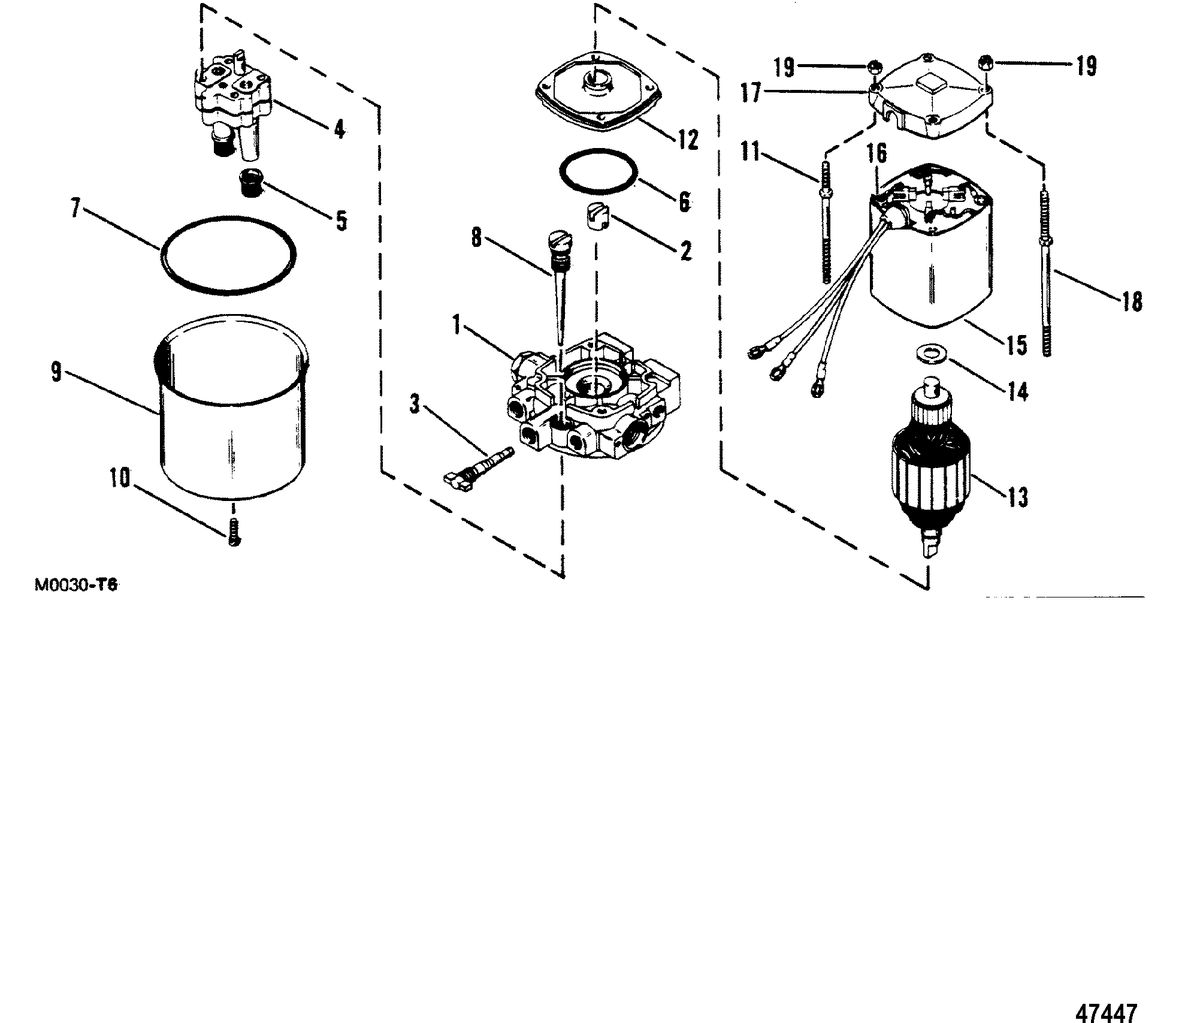 MERCRUISER TR (200 RATIO) TRS (1.50 RATIO) STERN DRIVE HYDRAULIC PUMP(OILDYNE PUMP METAL RESERVOIR)